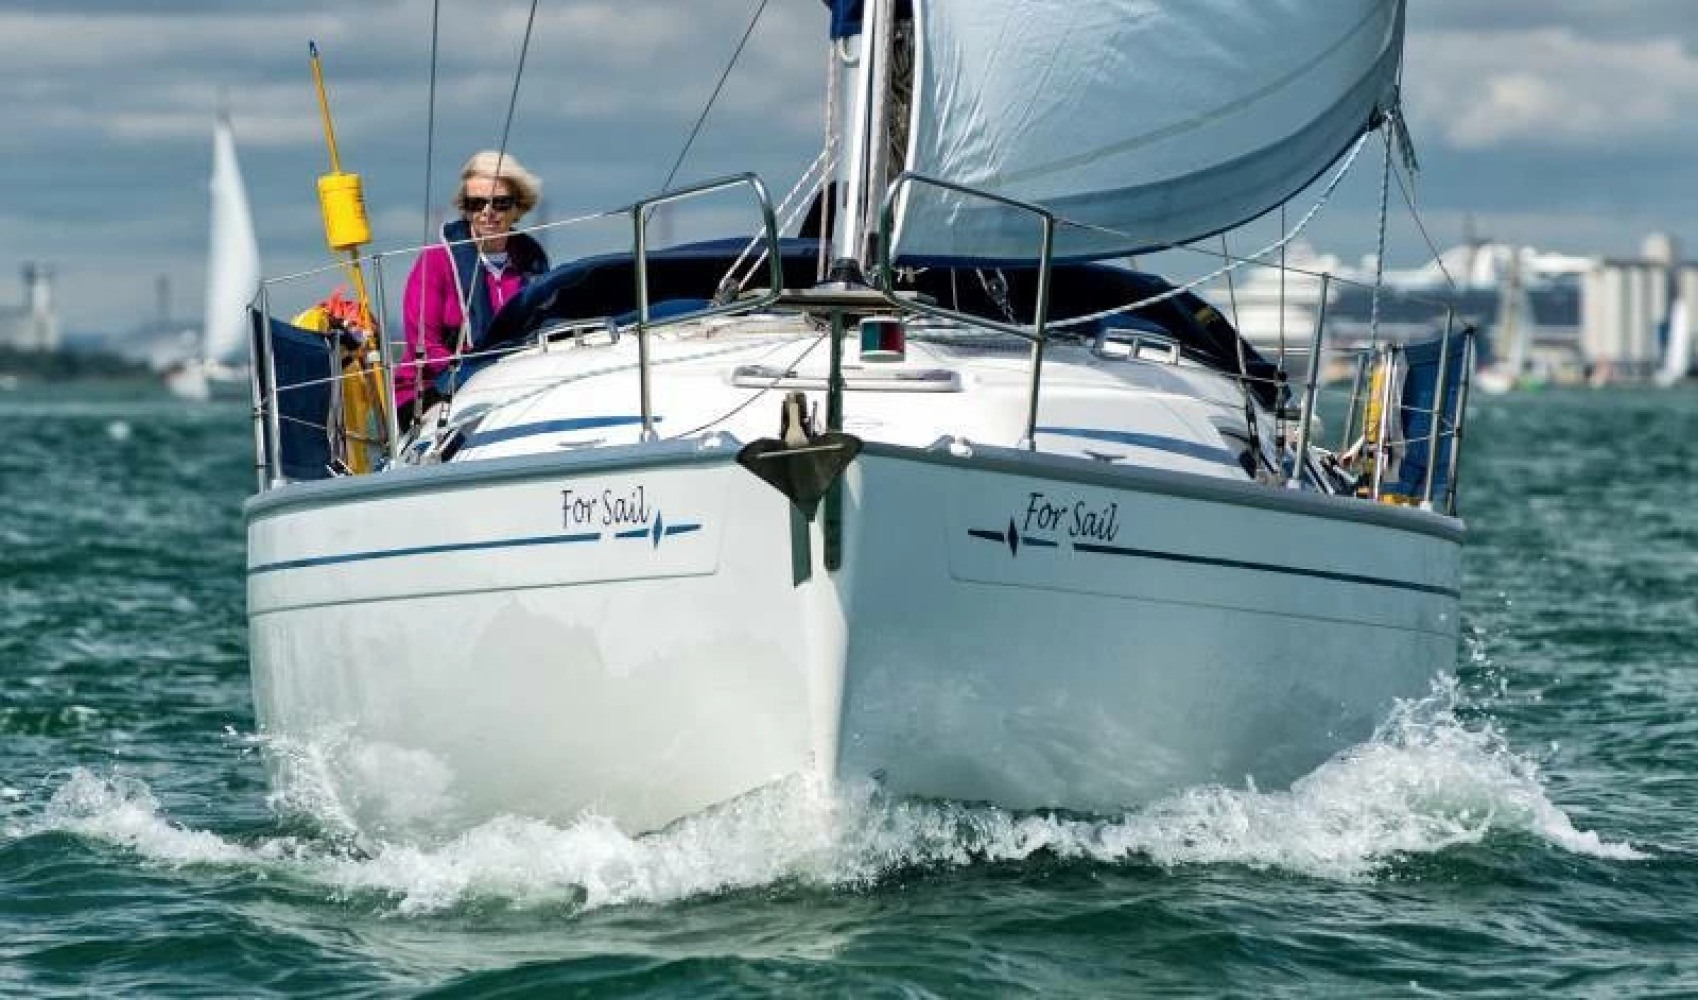 Yacht Sail Trim & Sailing Skills - Solent Boat Training